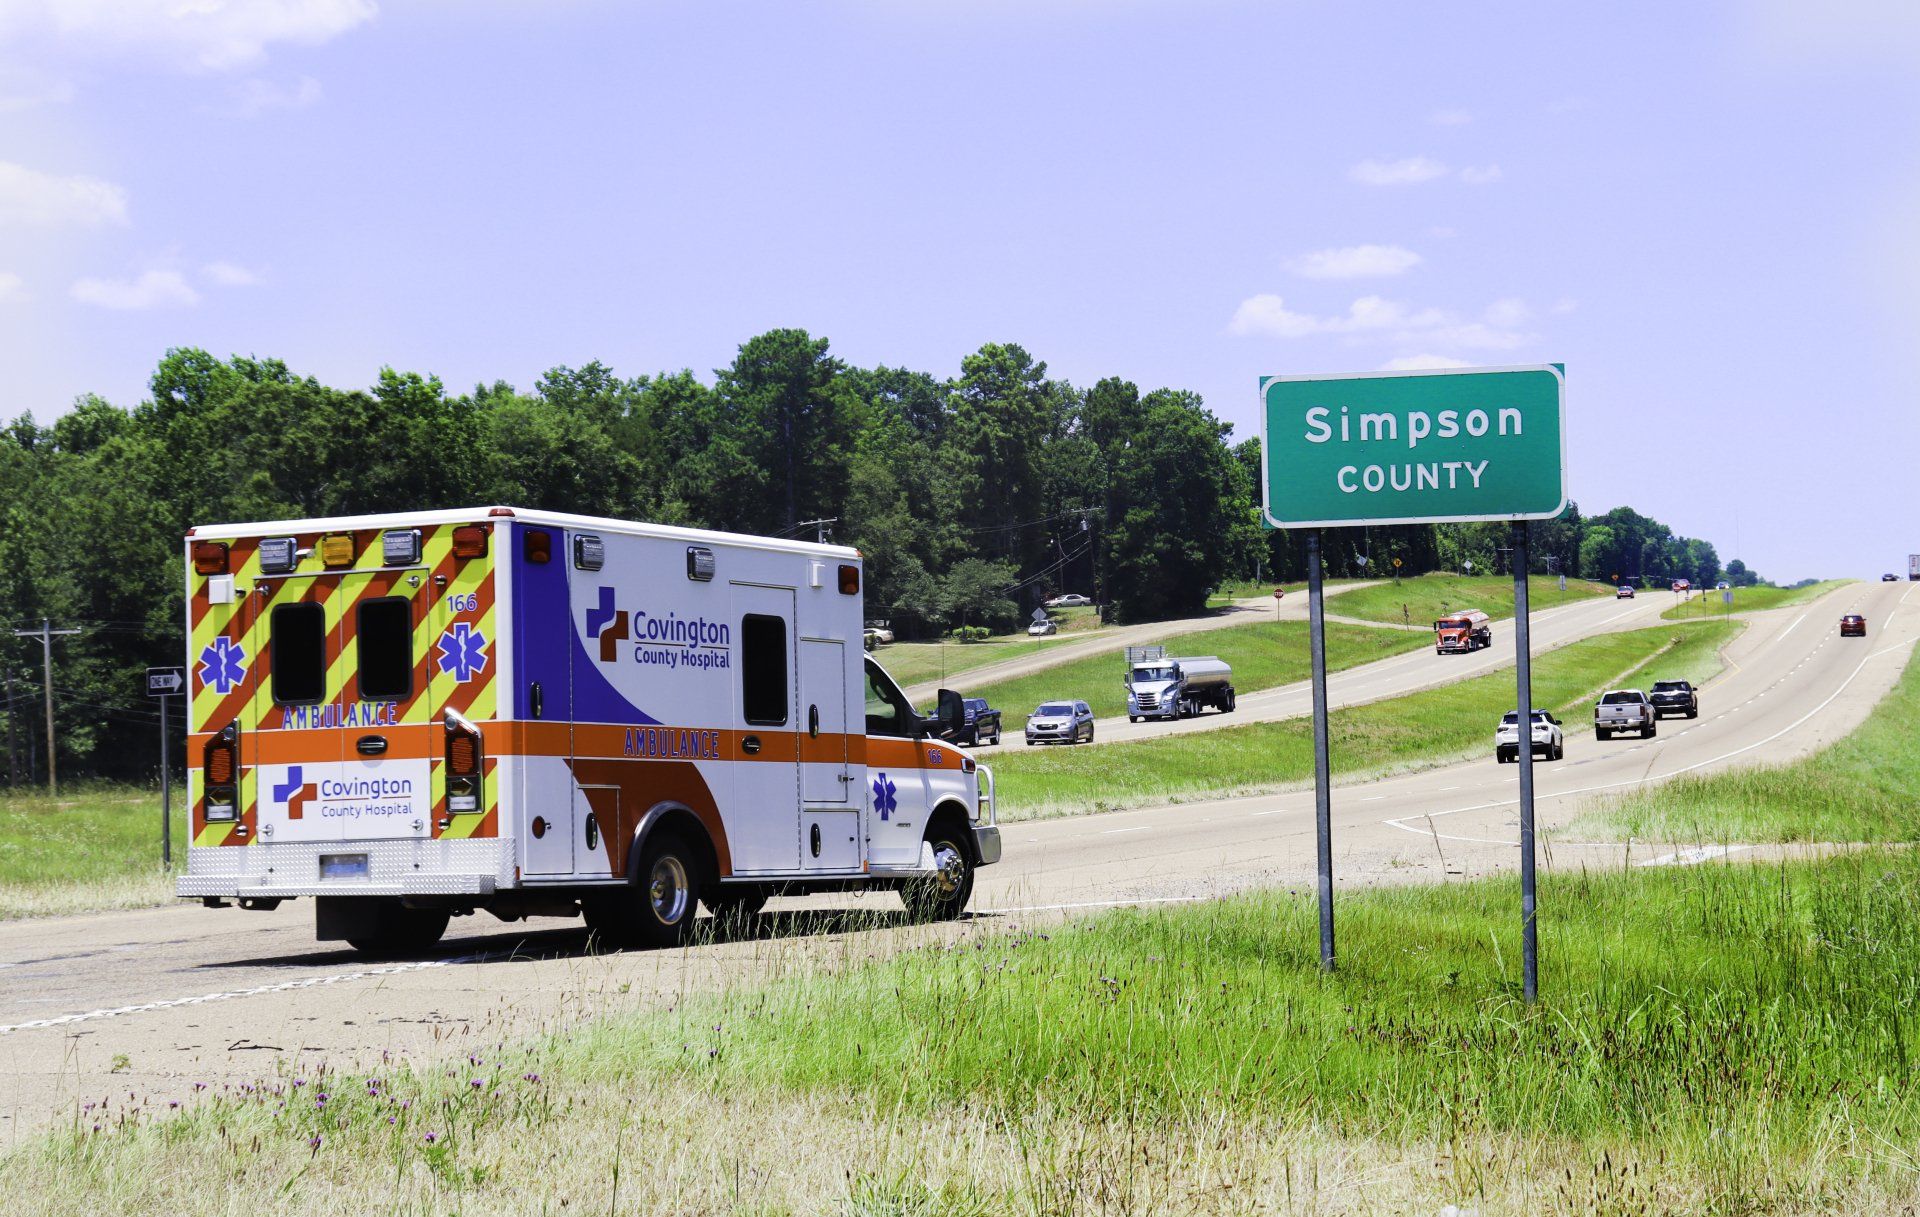 Covington County Hospital Ambulance Service to Partner with Simpson County